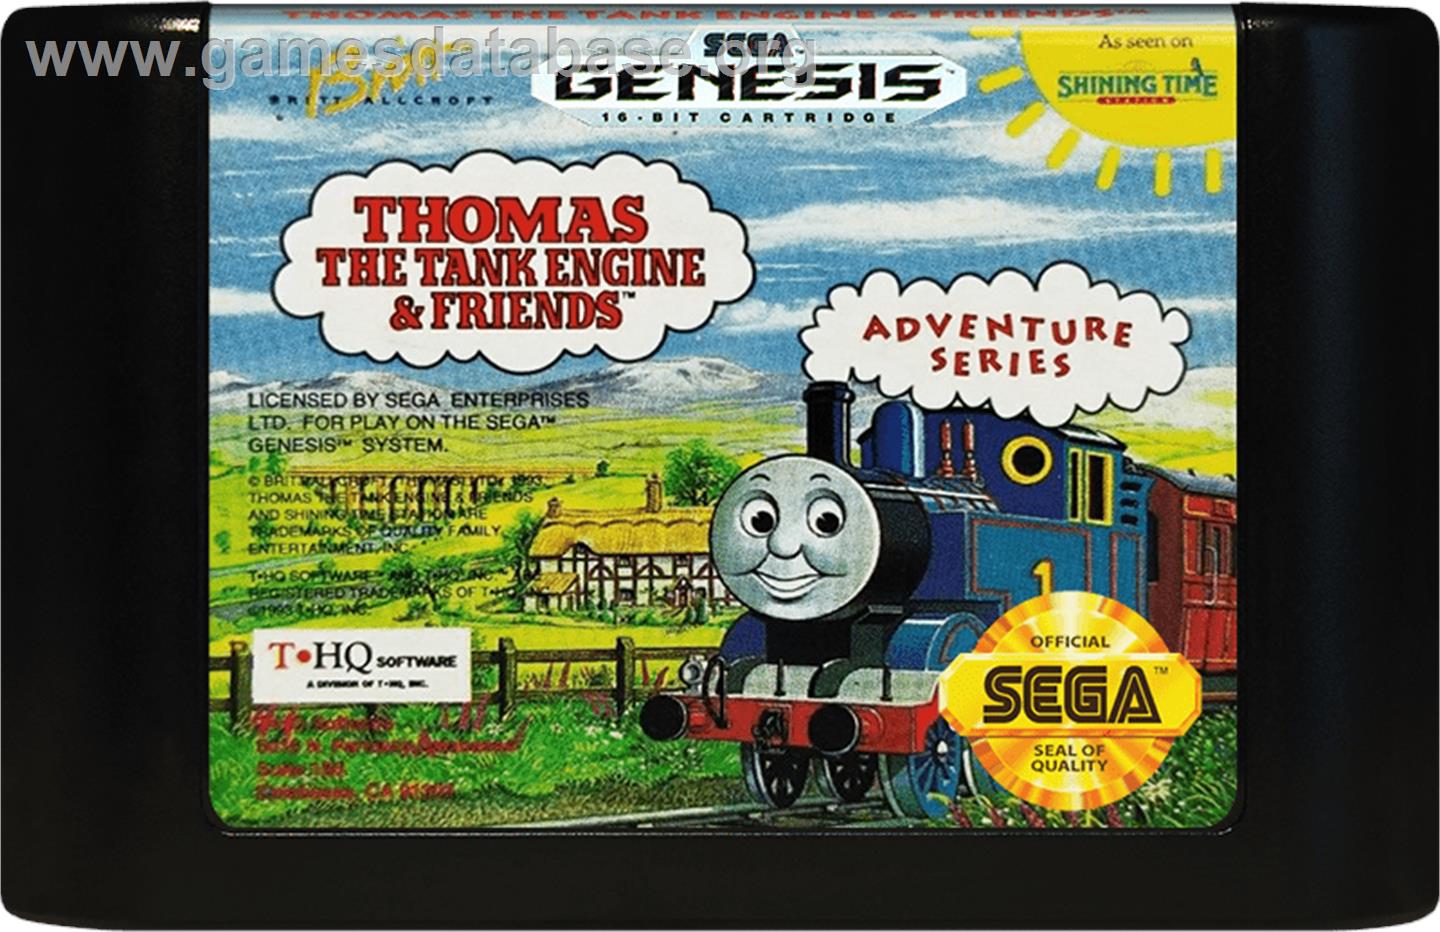 Thomas the Tank Engine & Friends - Sega Genesis - Artwork - Cartridge